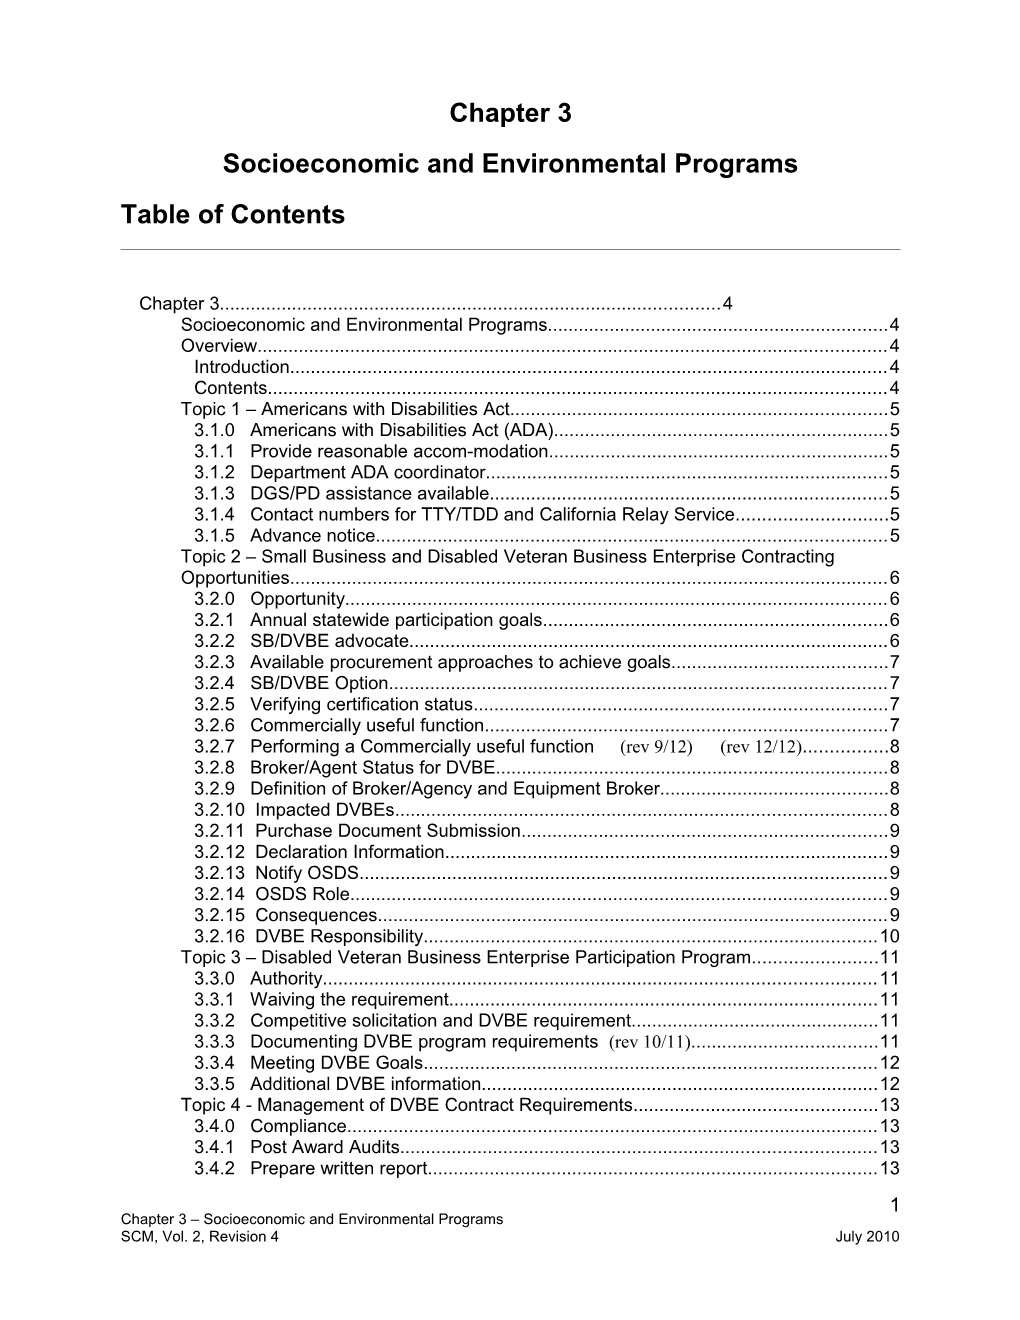 Socioeconomic and Environmental Programs s1